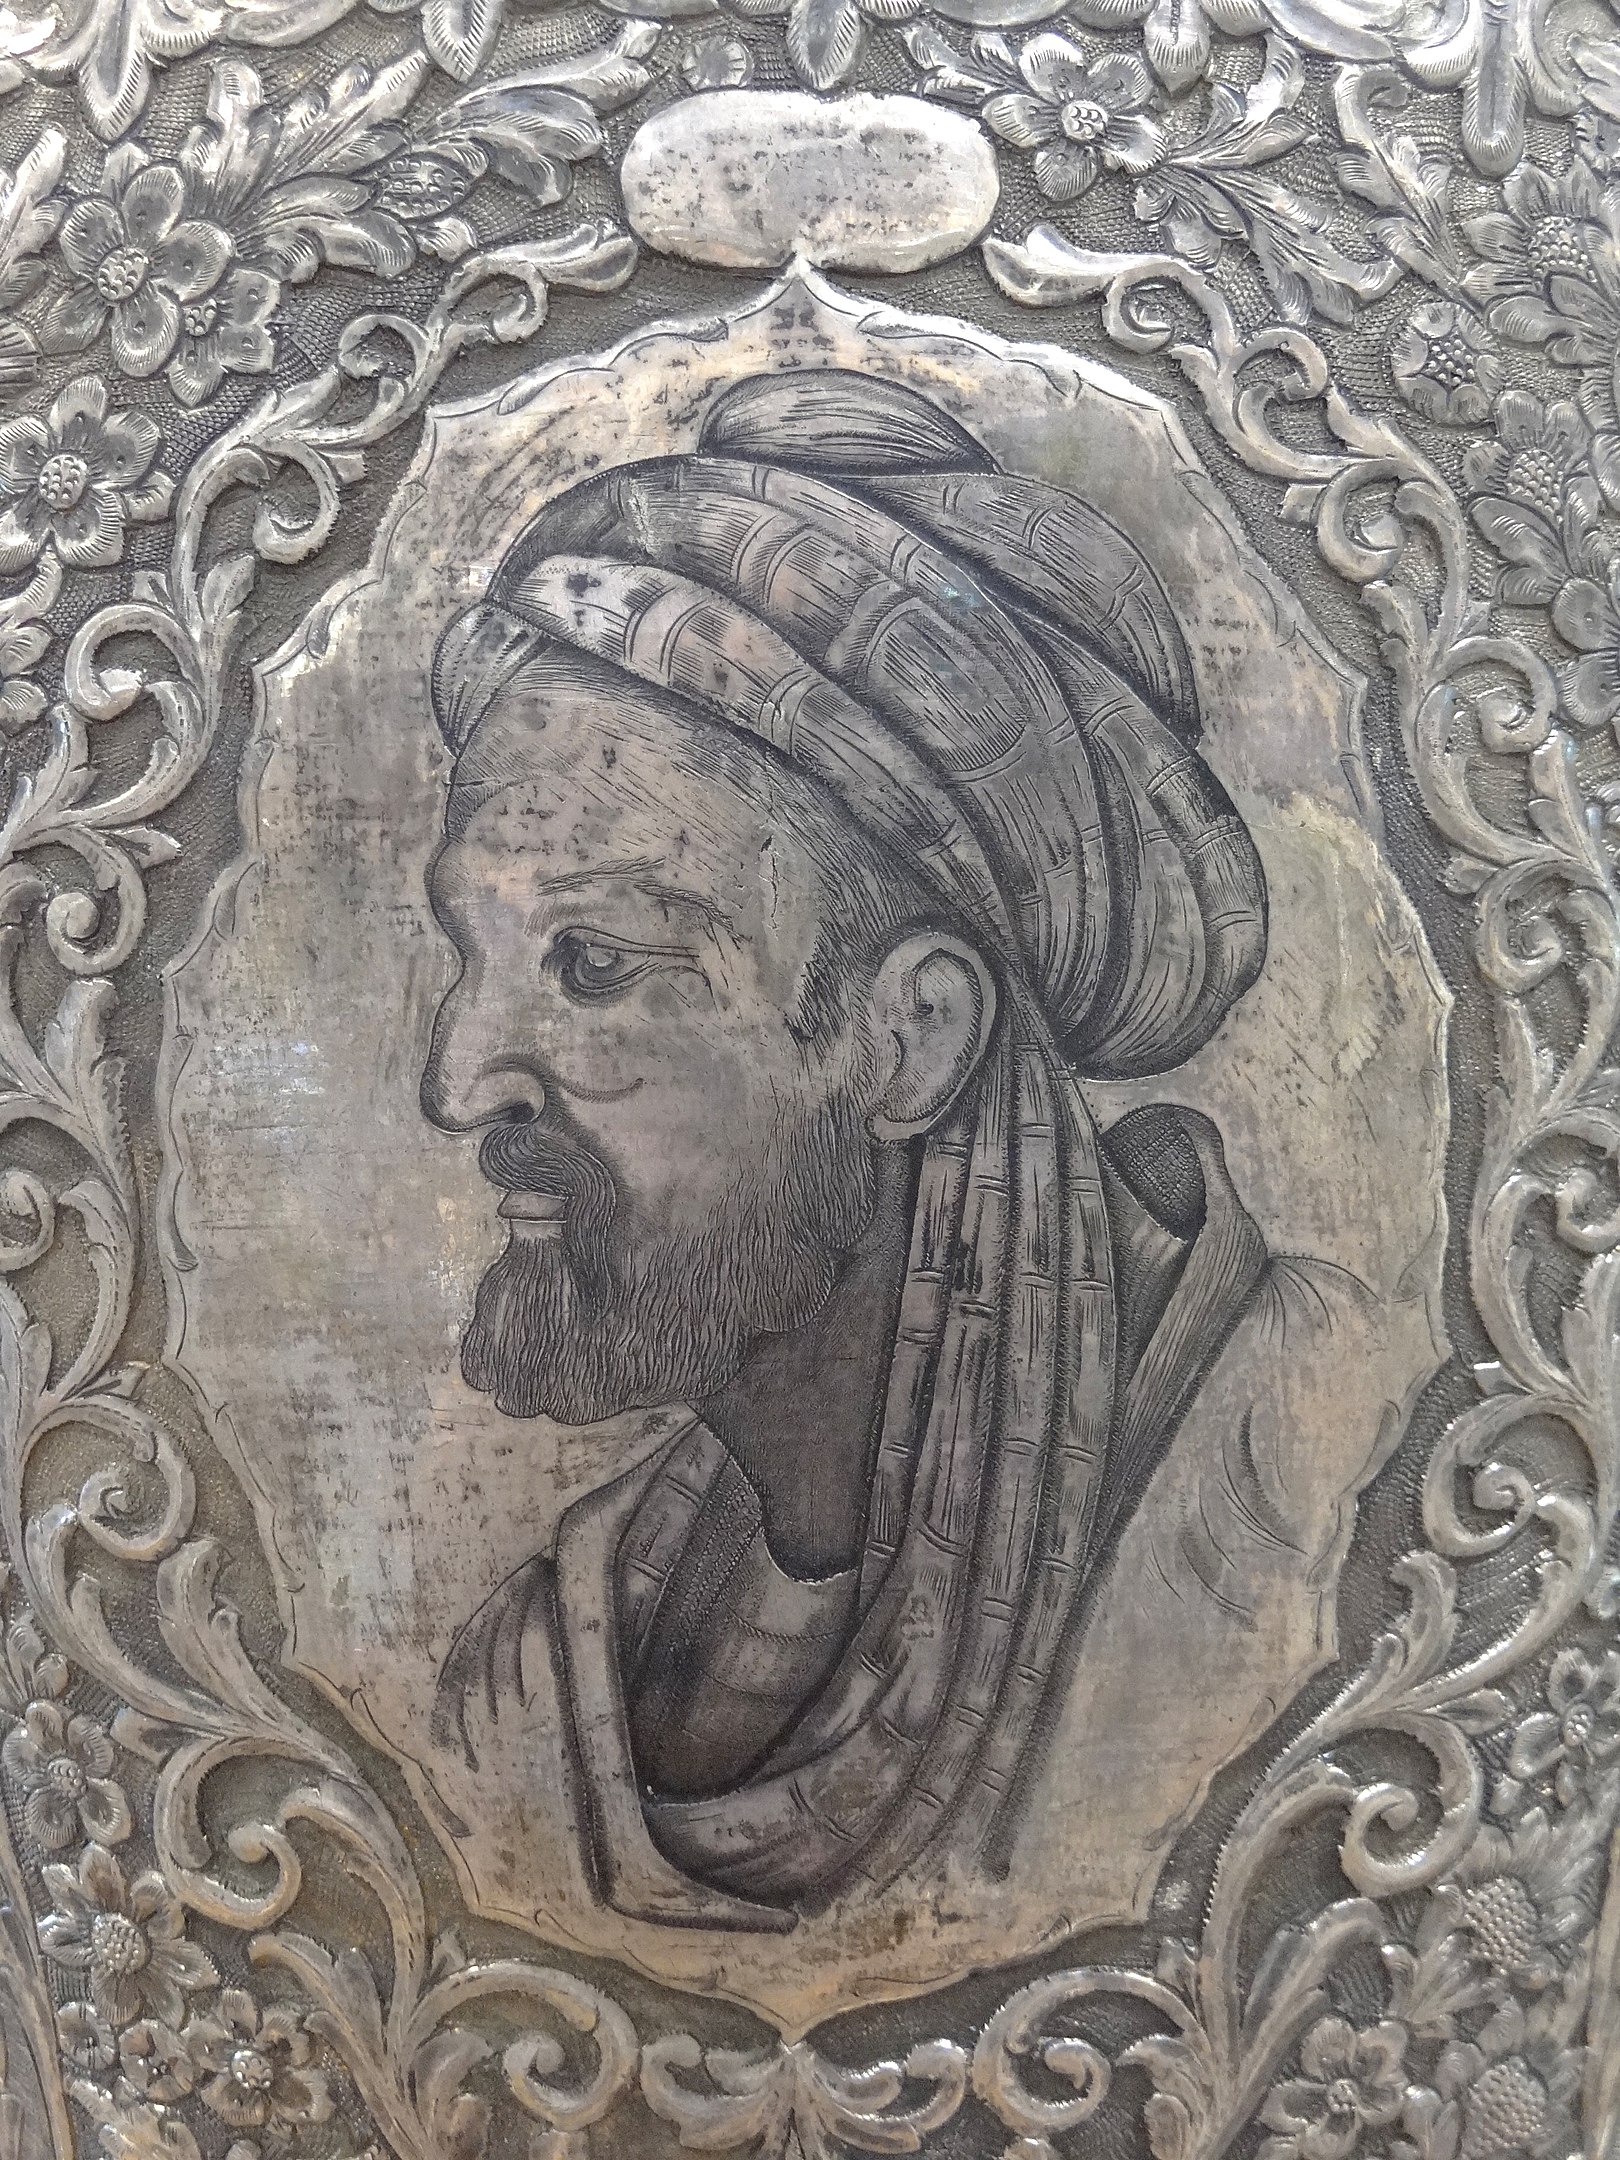 1620px avicenna portrait on silver vase museum at buali sina (avicenna) mausoleum hamadan western iran (7423560860)